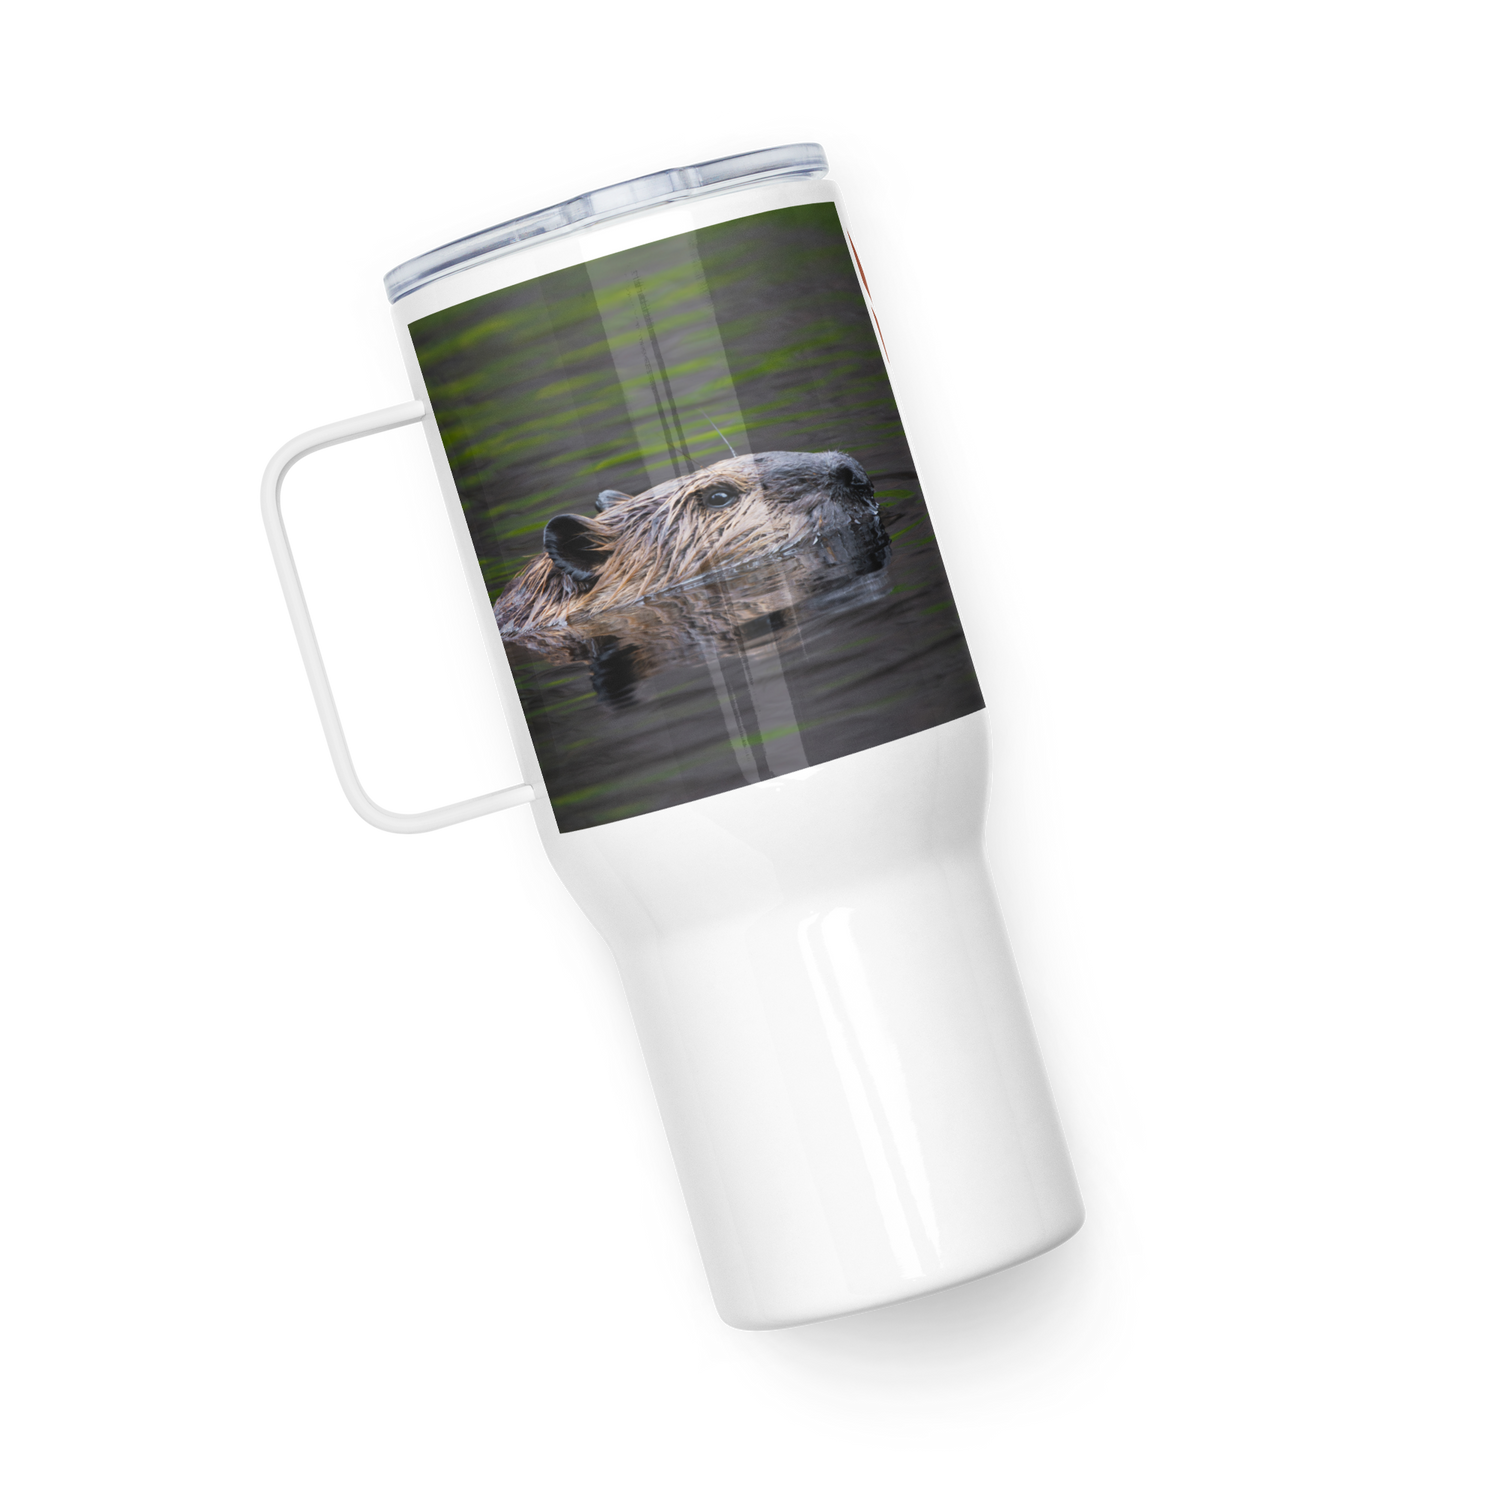 Beaver Travel mug with a handle